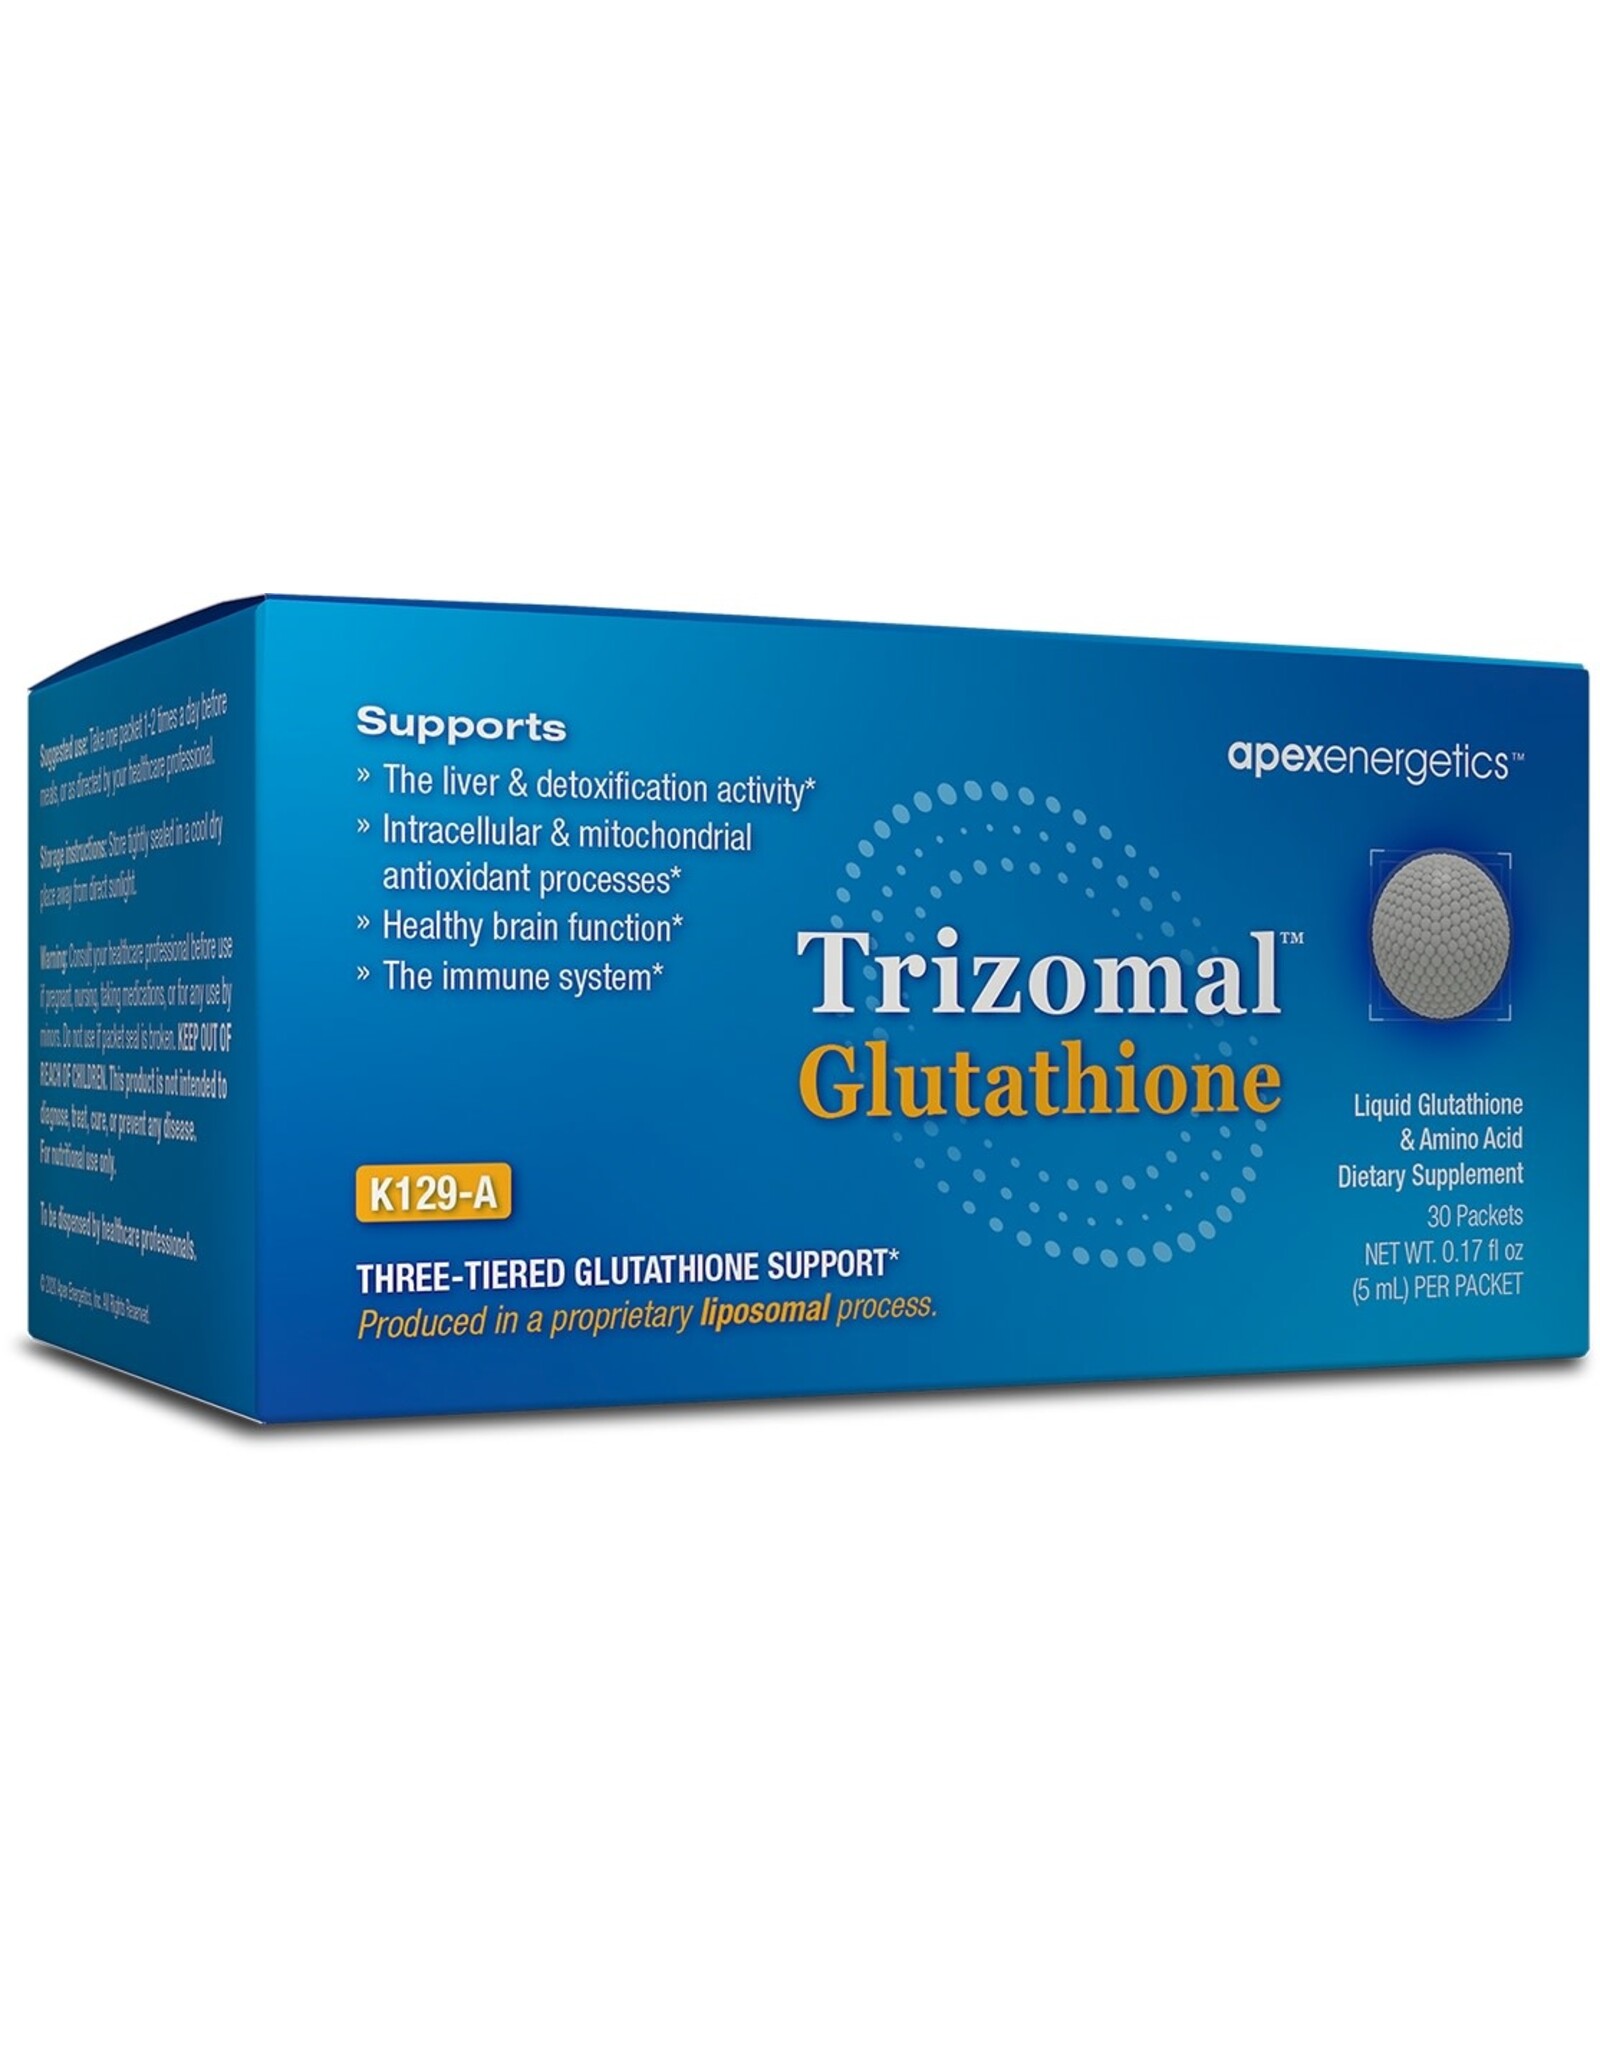 Apex Energetics Trizomal™ Glutathione 30-Packet Box